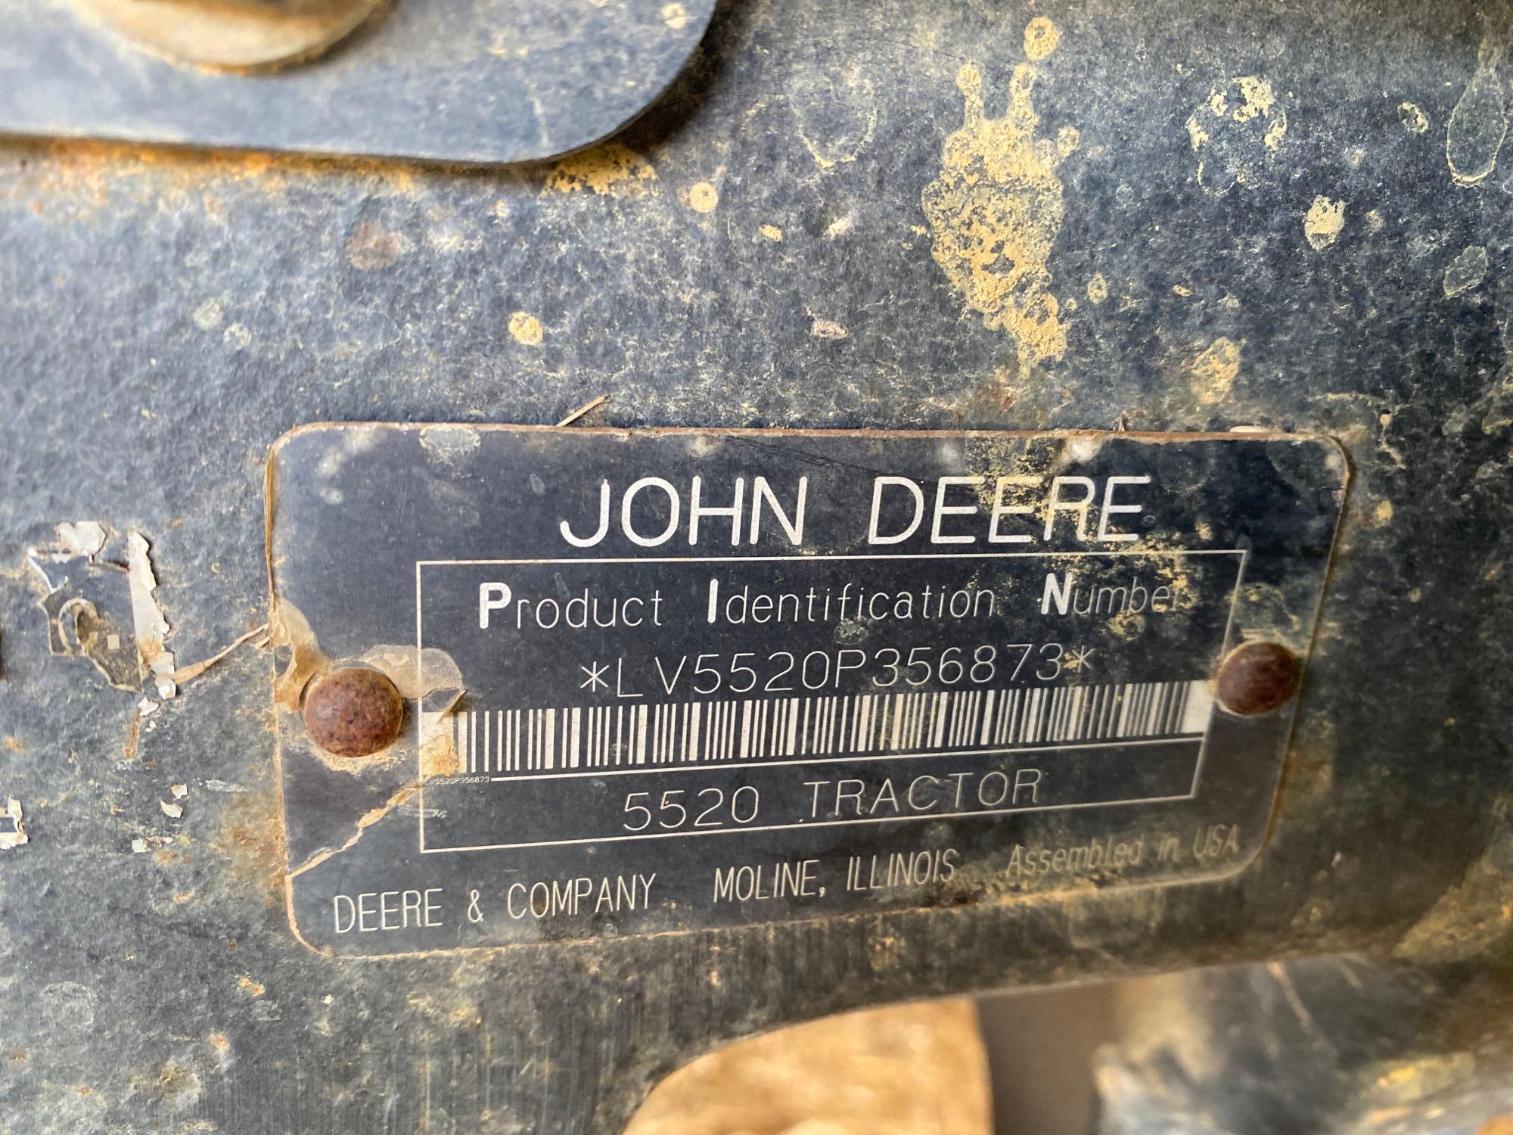 Image for John Deere 5520 2WD Tractor, Cab Model 541 Loader w/ 6' Bucket, Hours: 3100